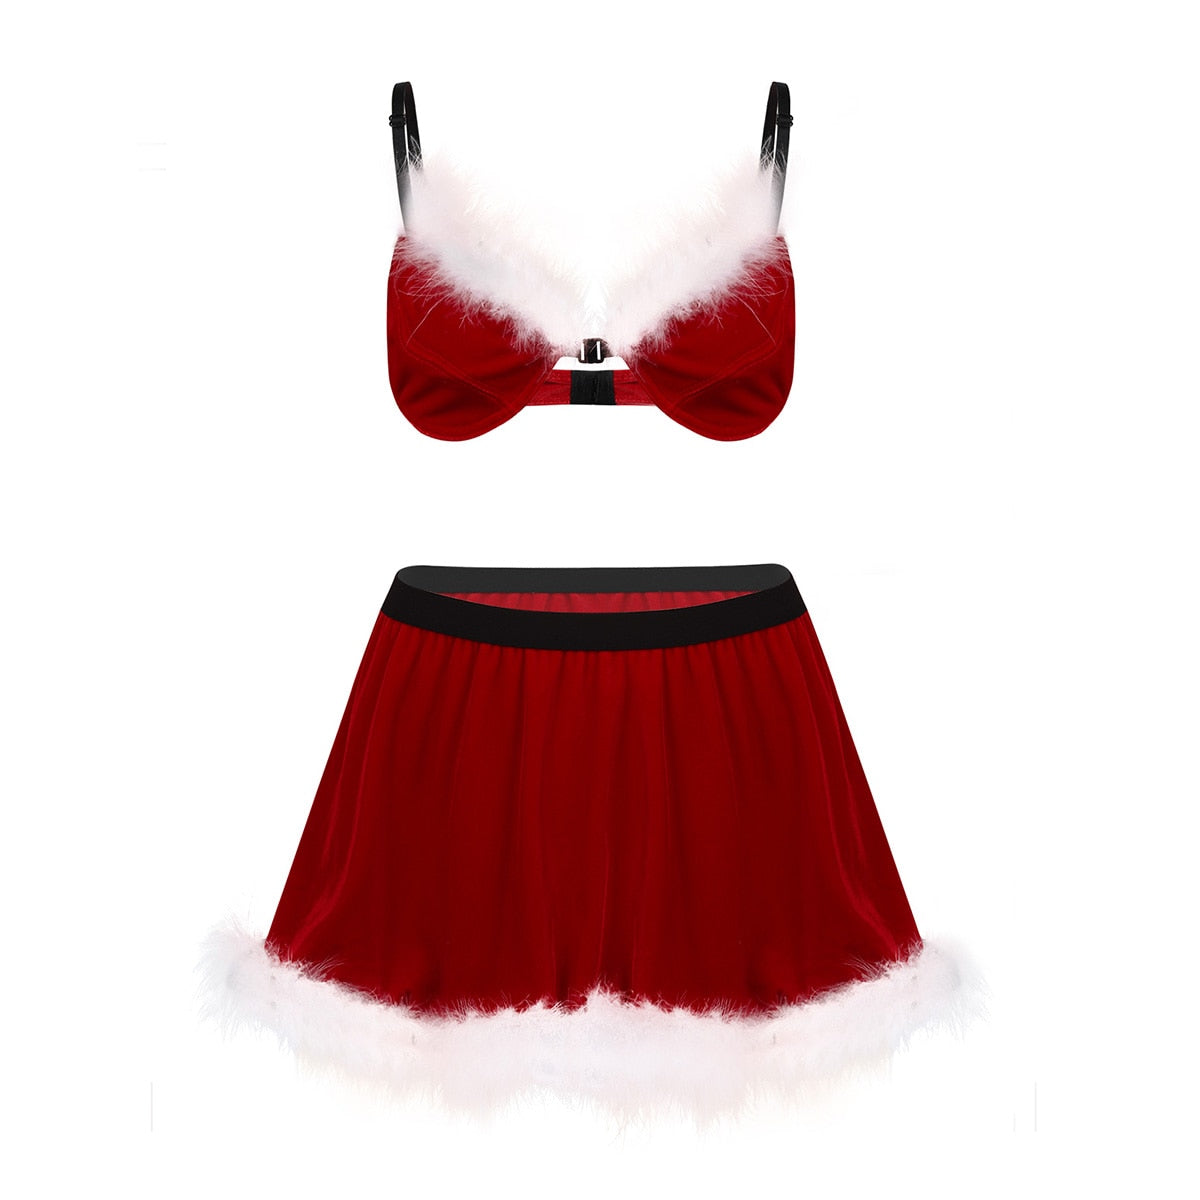 Erotic Christmas Lingerie Set: Seductive Costumes for Crossdressers